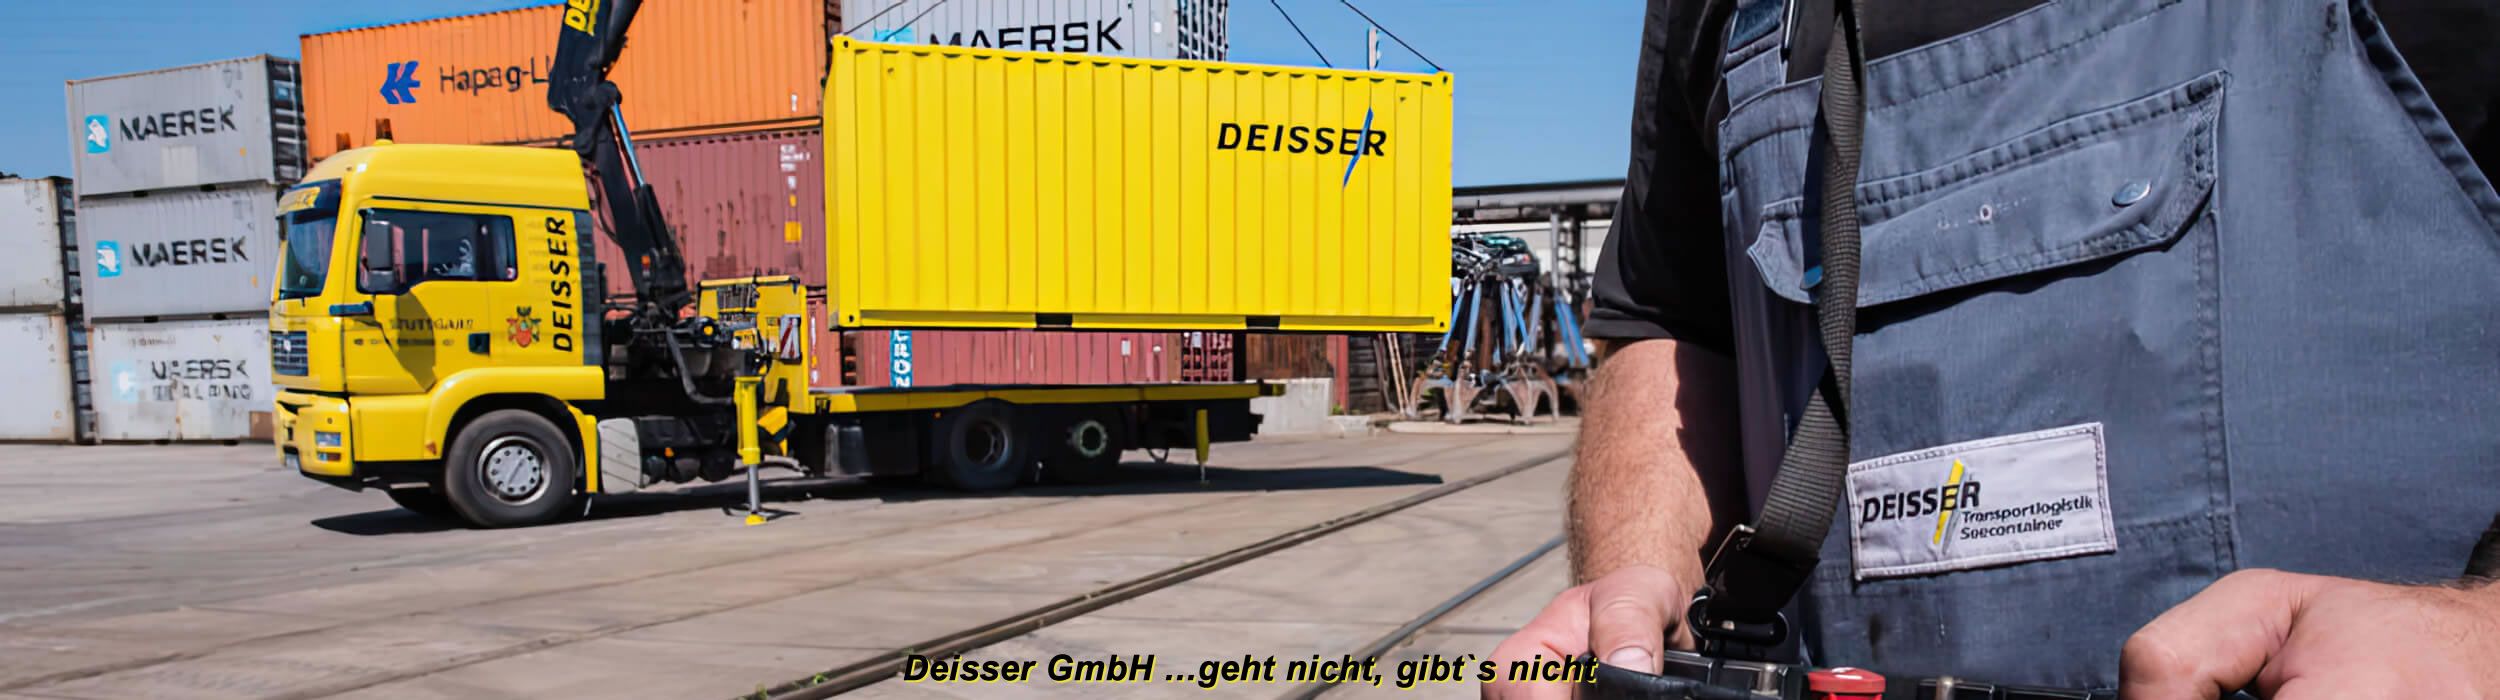 Deisser GmbH / Transportlogistik Seecontainer / Jobs